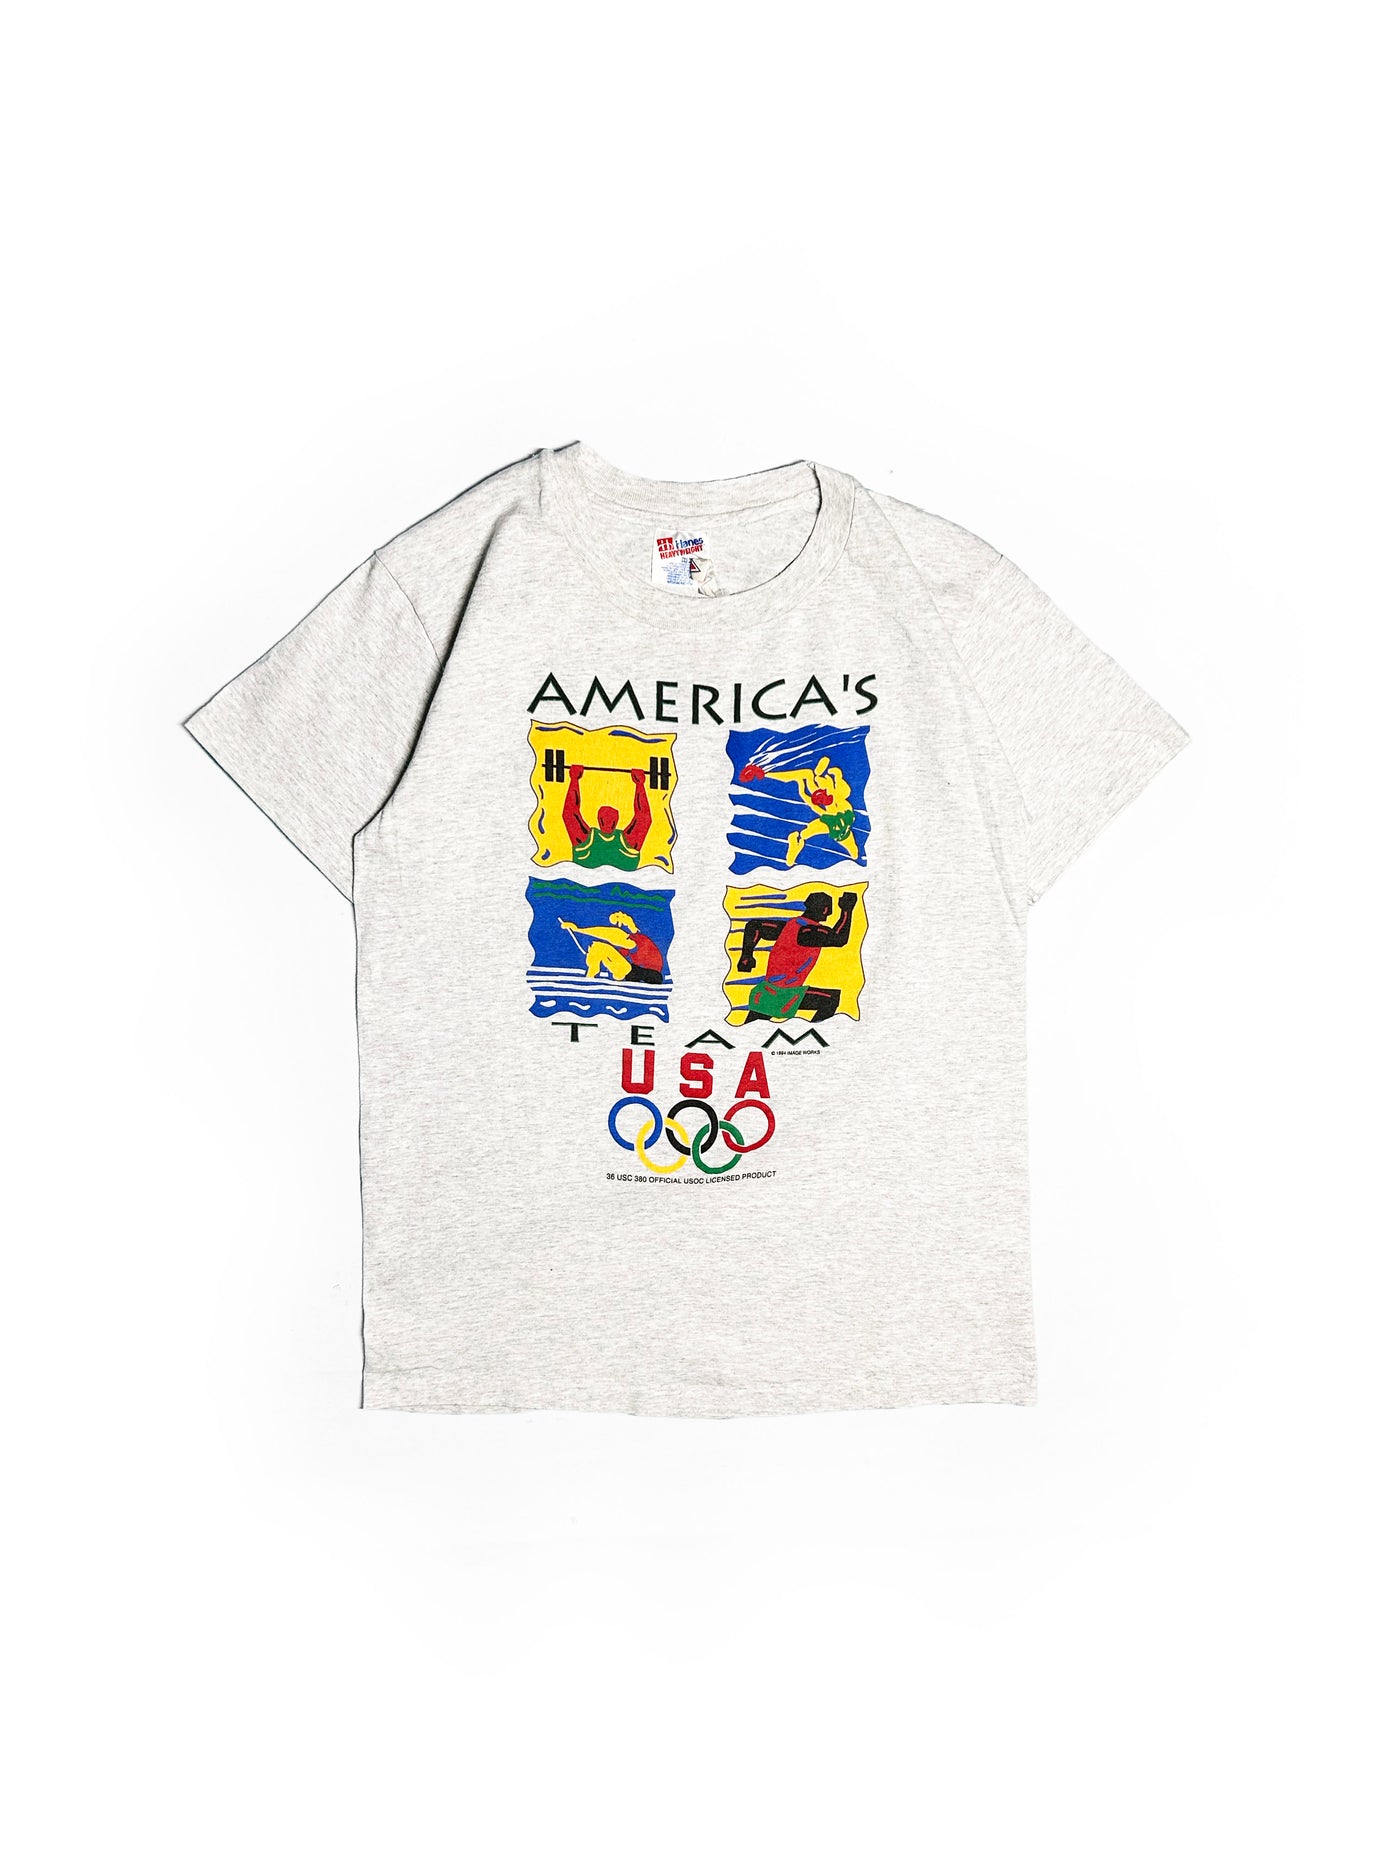 Vintage 1994 America’s Team Olympic T-Shirt